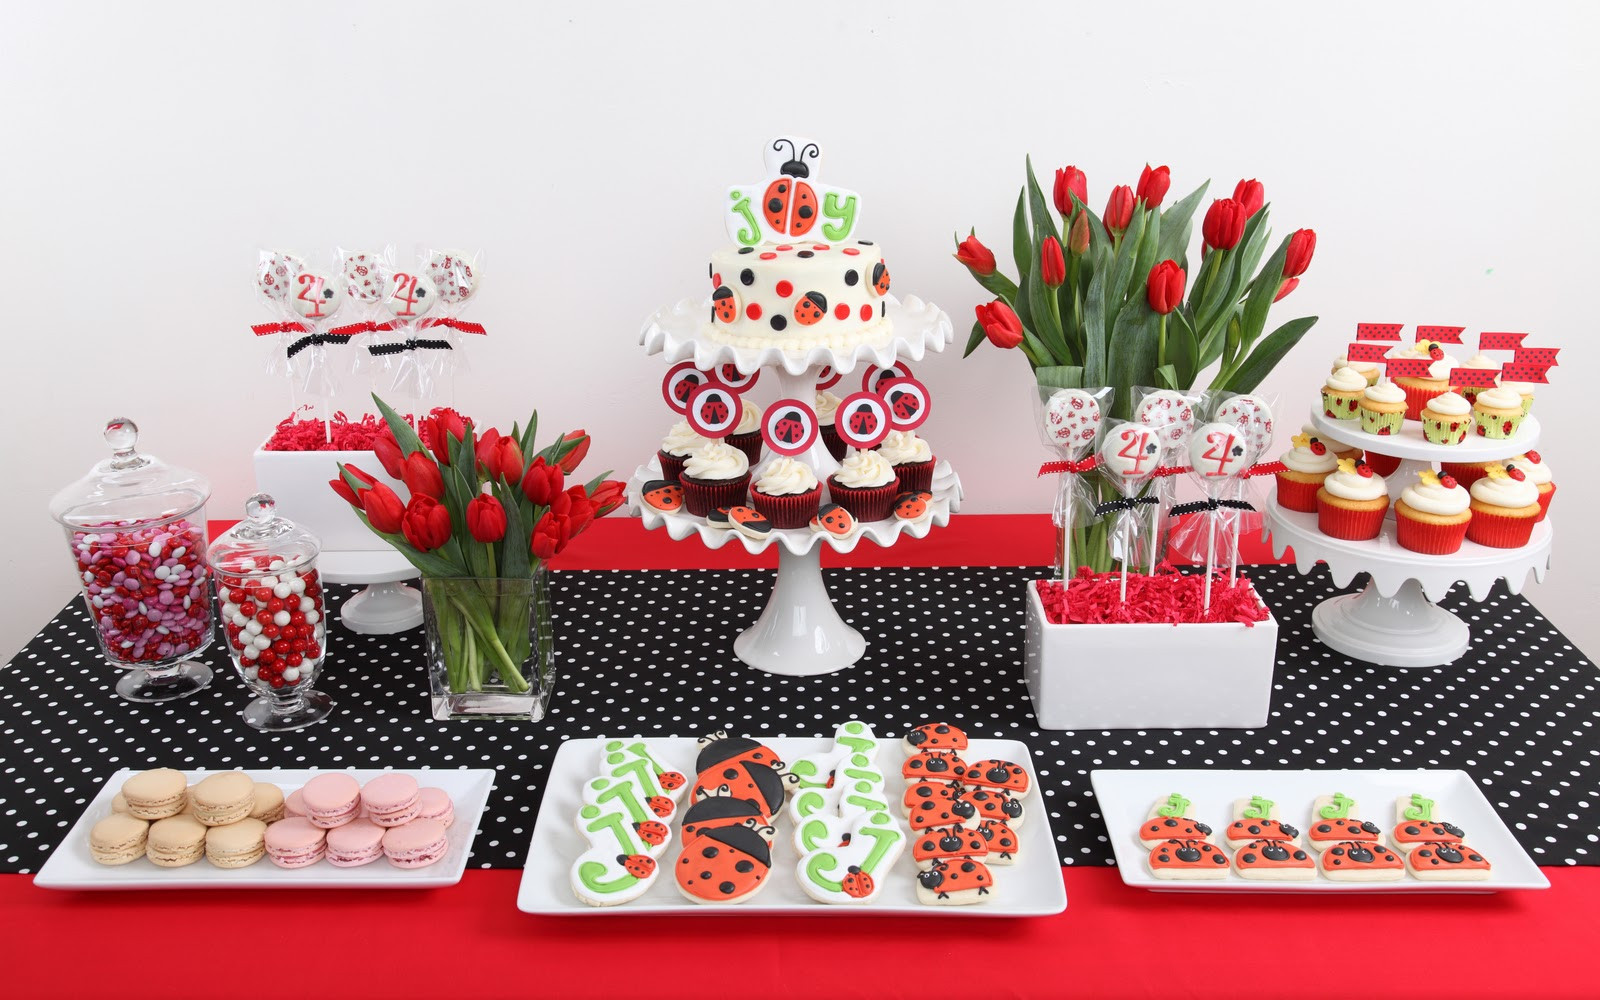 Ladybug Birthday Decorations
 Joy’s Ladybug Birthday – Glorious Treats